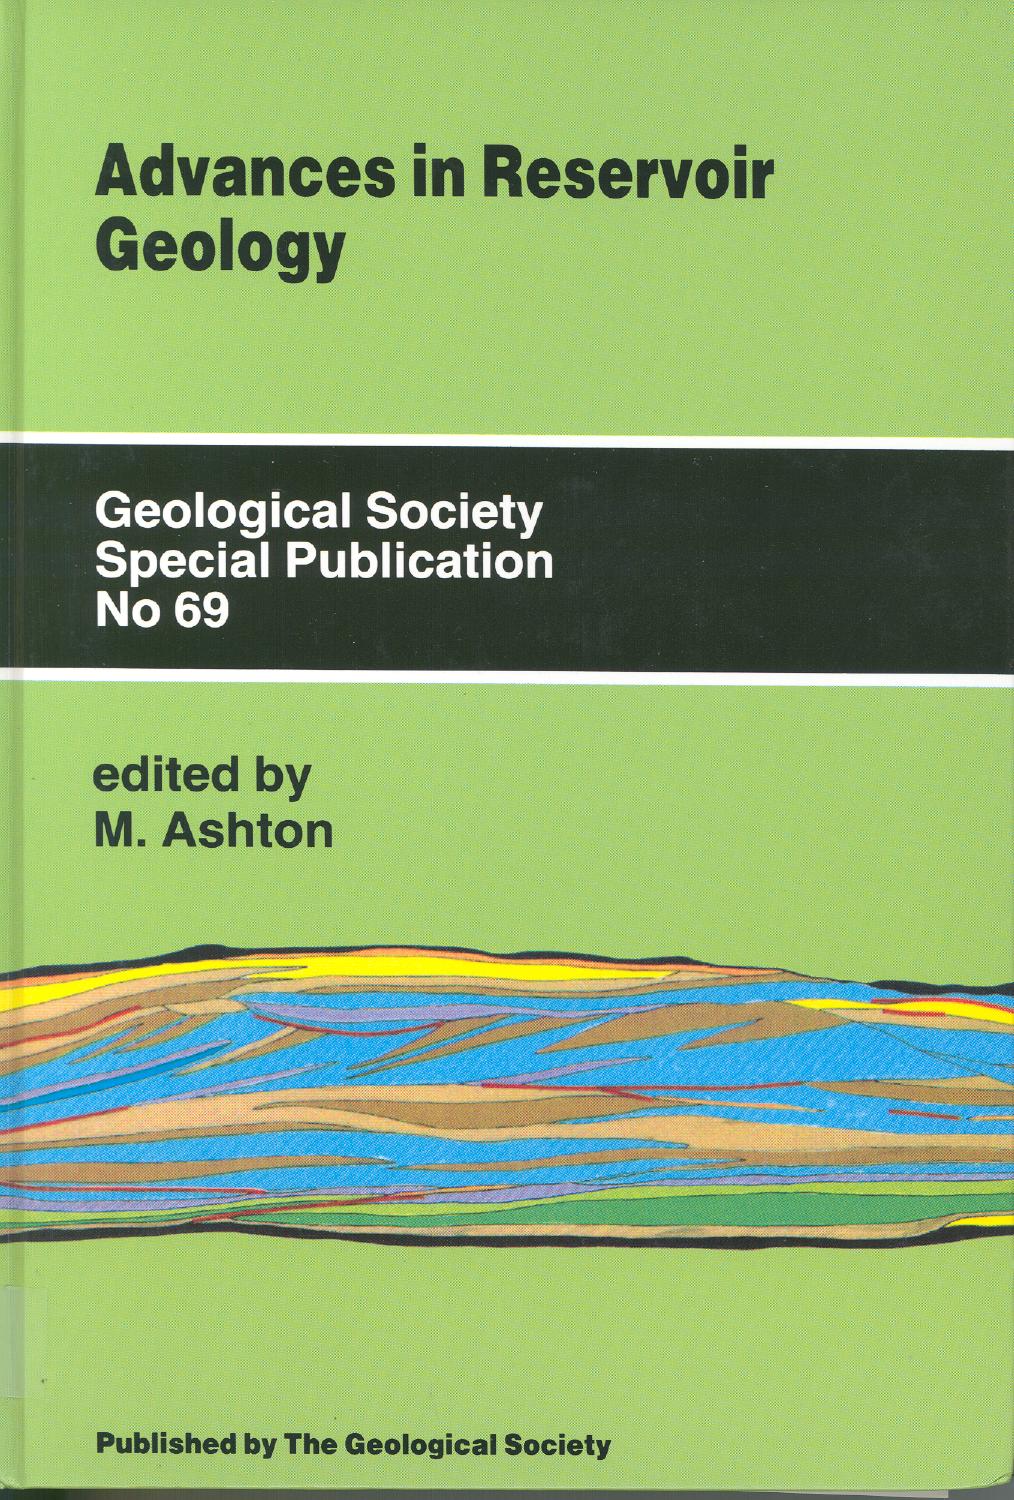 Advances in reservoir geology                                                                                                 1993